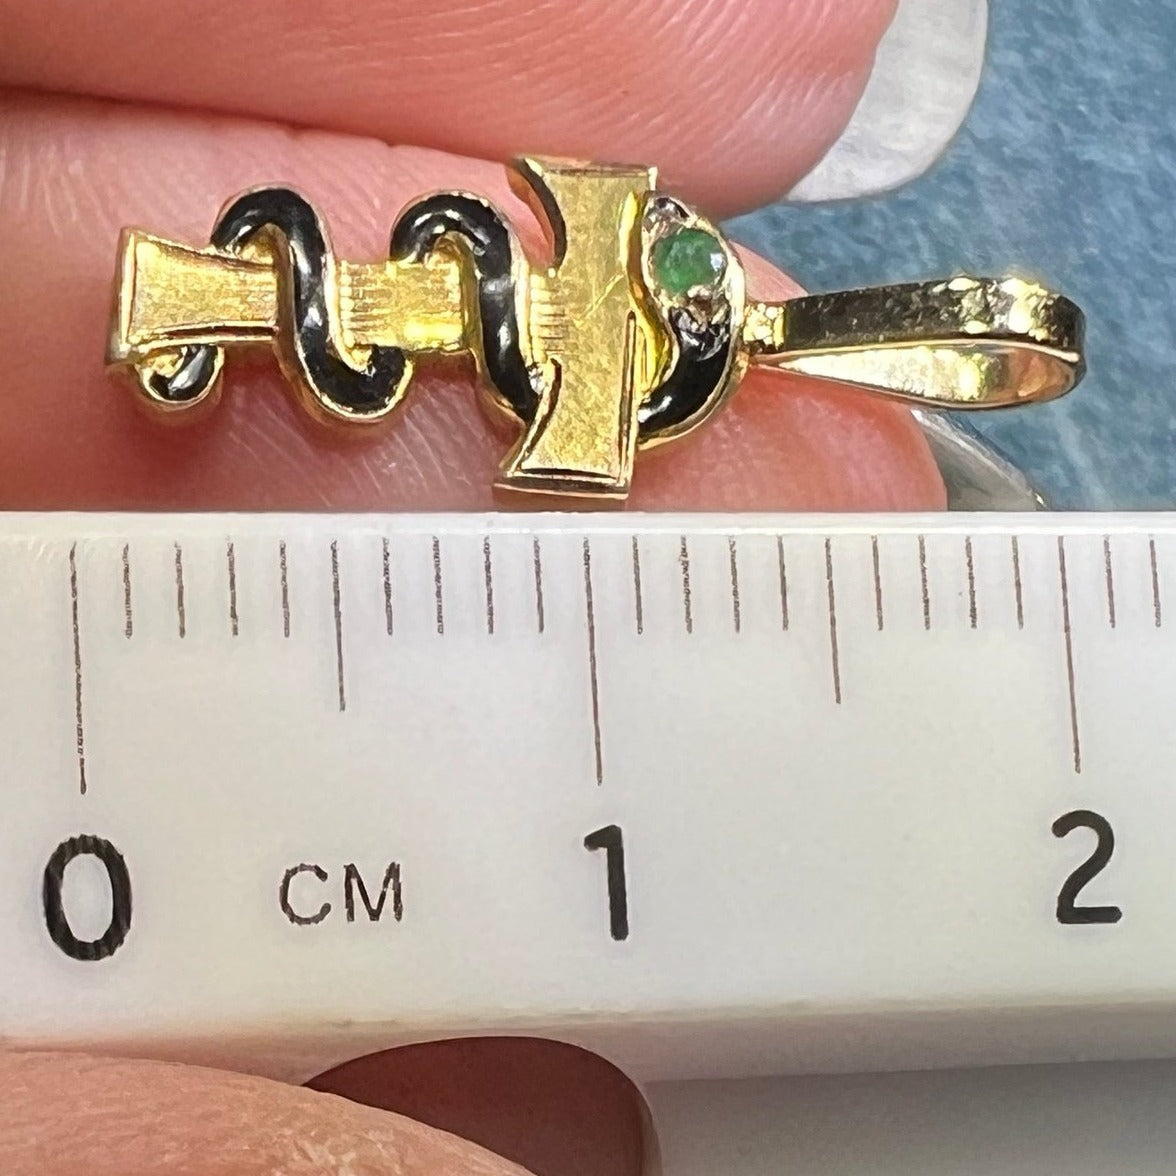 10k Gold Snake Coiled Around Initial "T" Pendant. Birks-Ellis 1940's. Tiny!